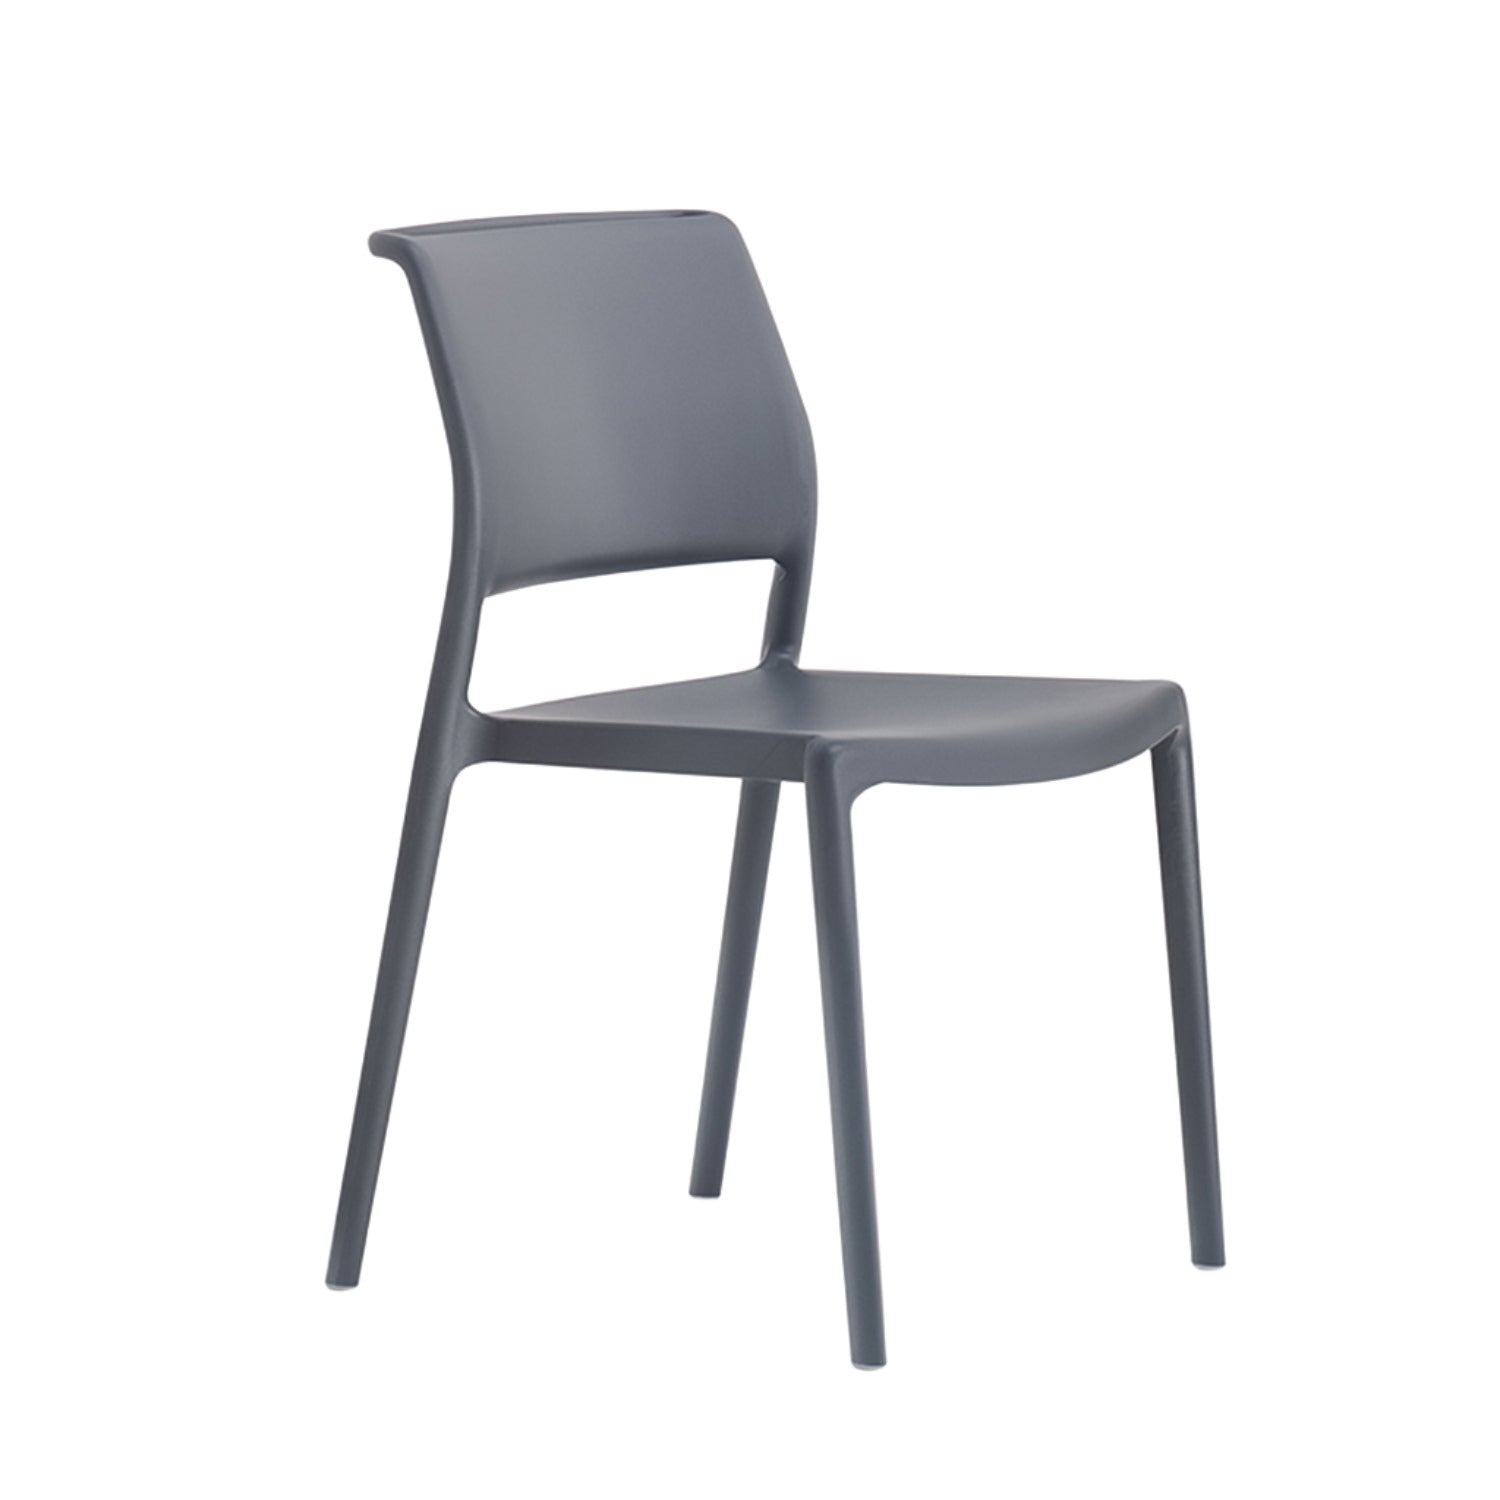 Pedrali Ara 310 Dining Chair in dark grey